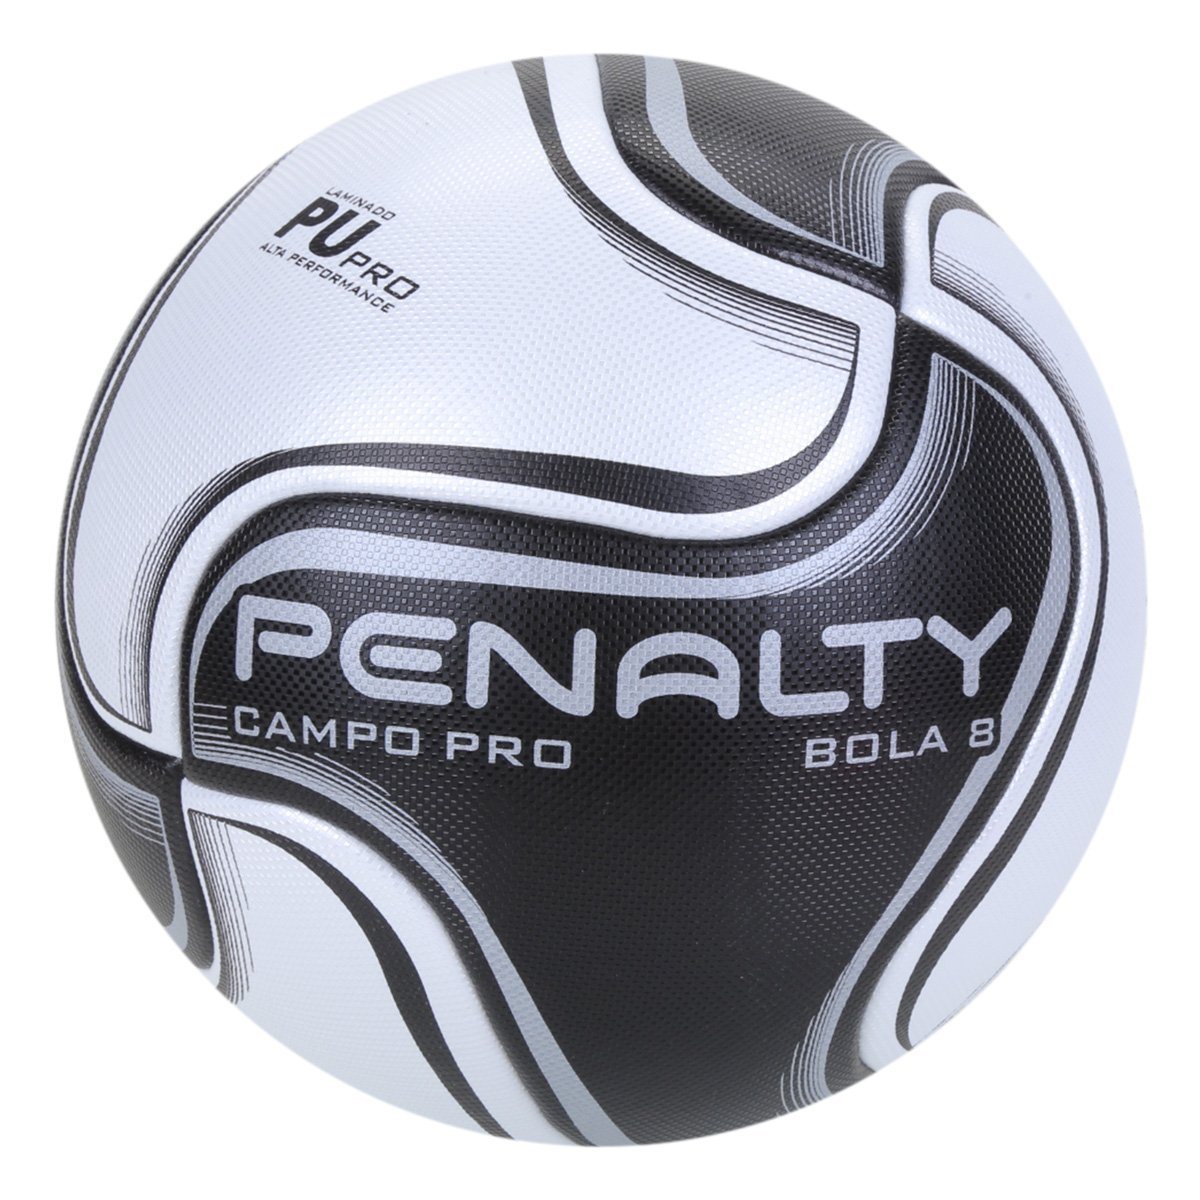 Bola de Futebol Campo Penalty 8 Pro XXI;Cor:Branco +Preto;Tamanho: Único;Gênero: Unissex - 1